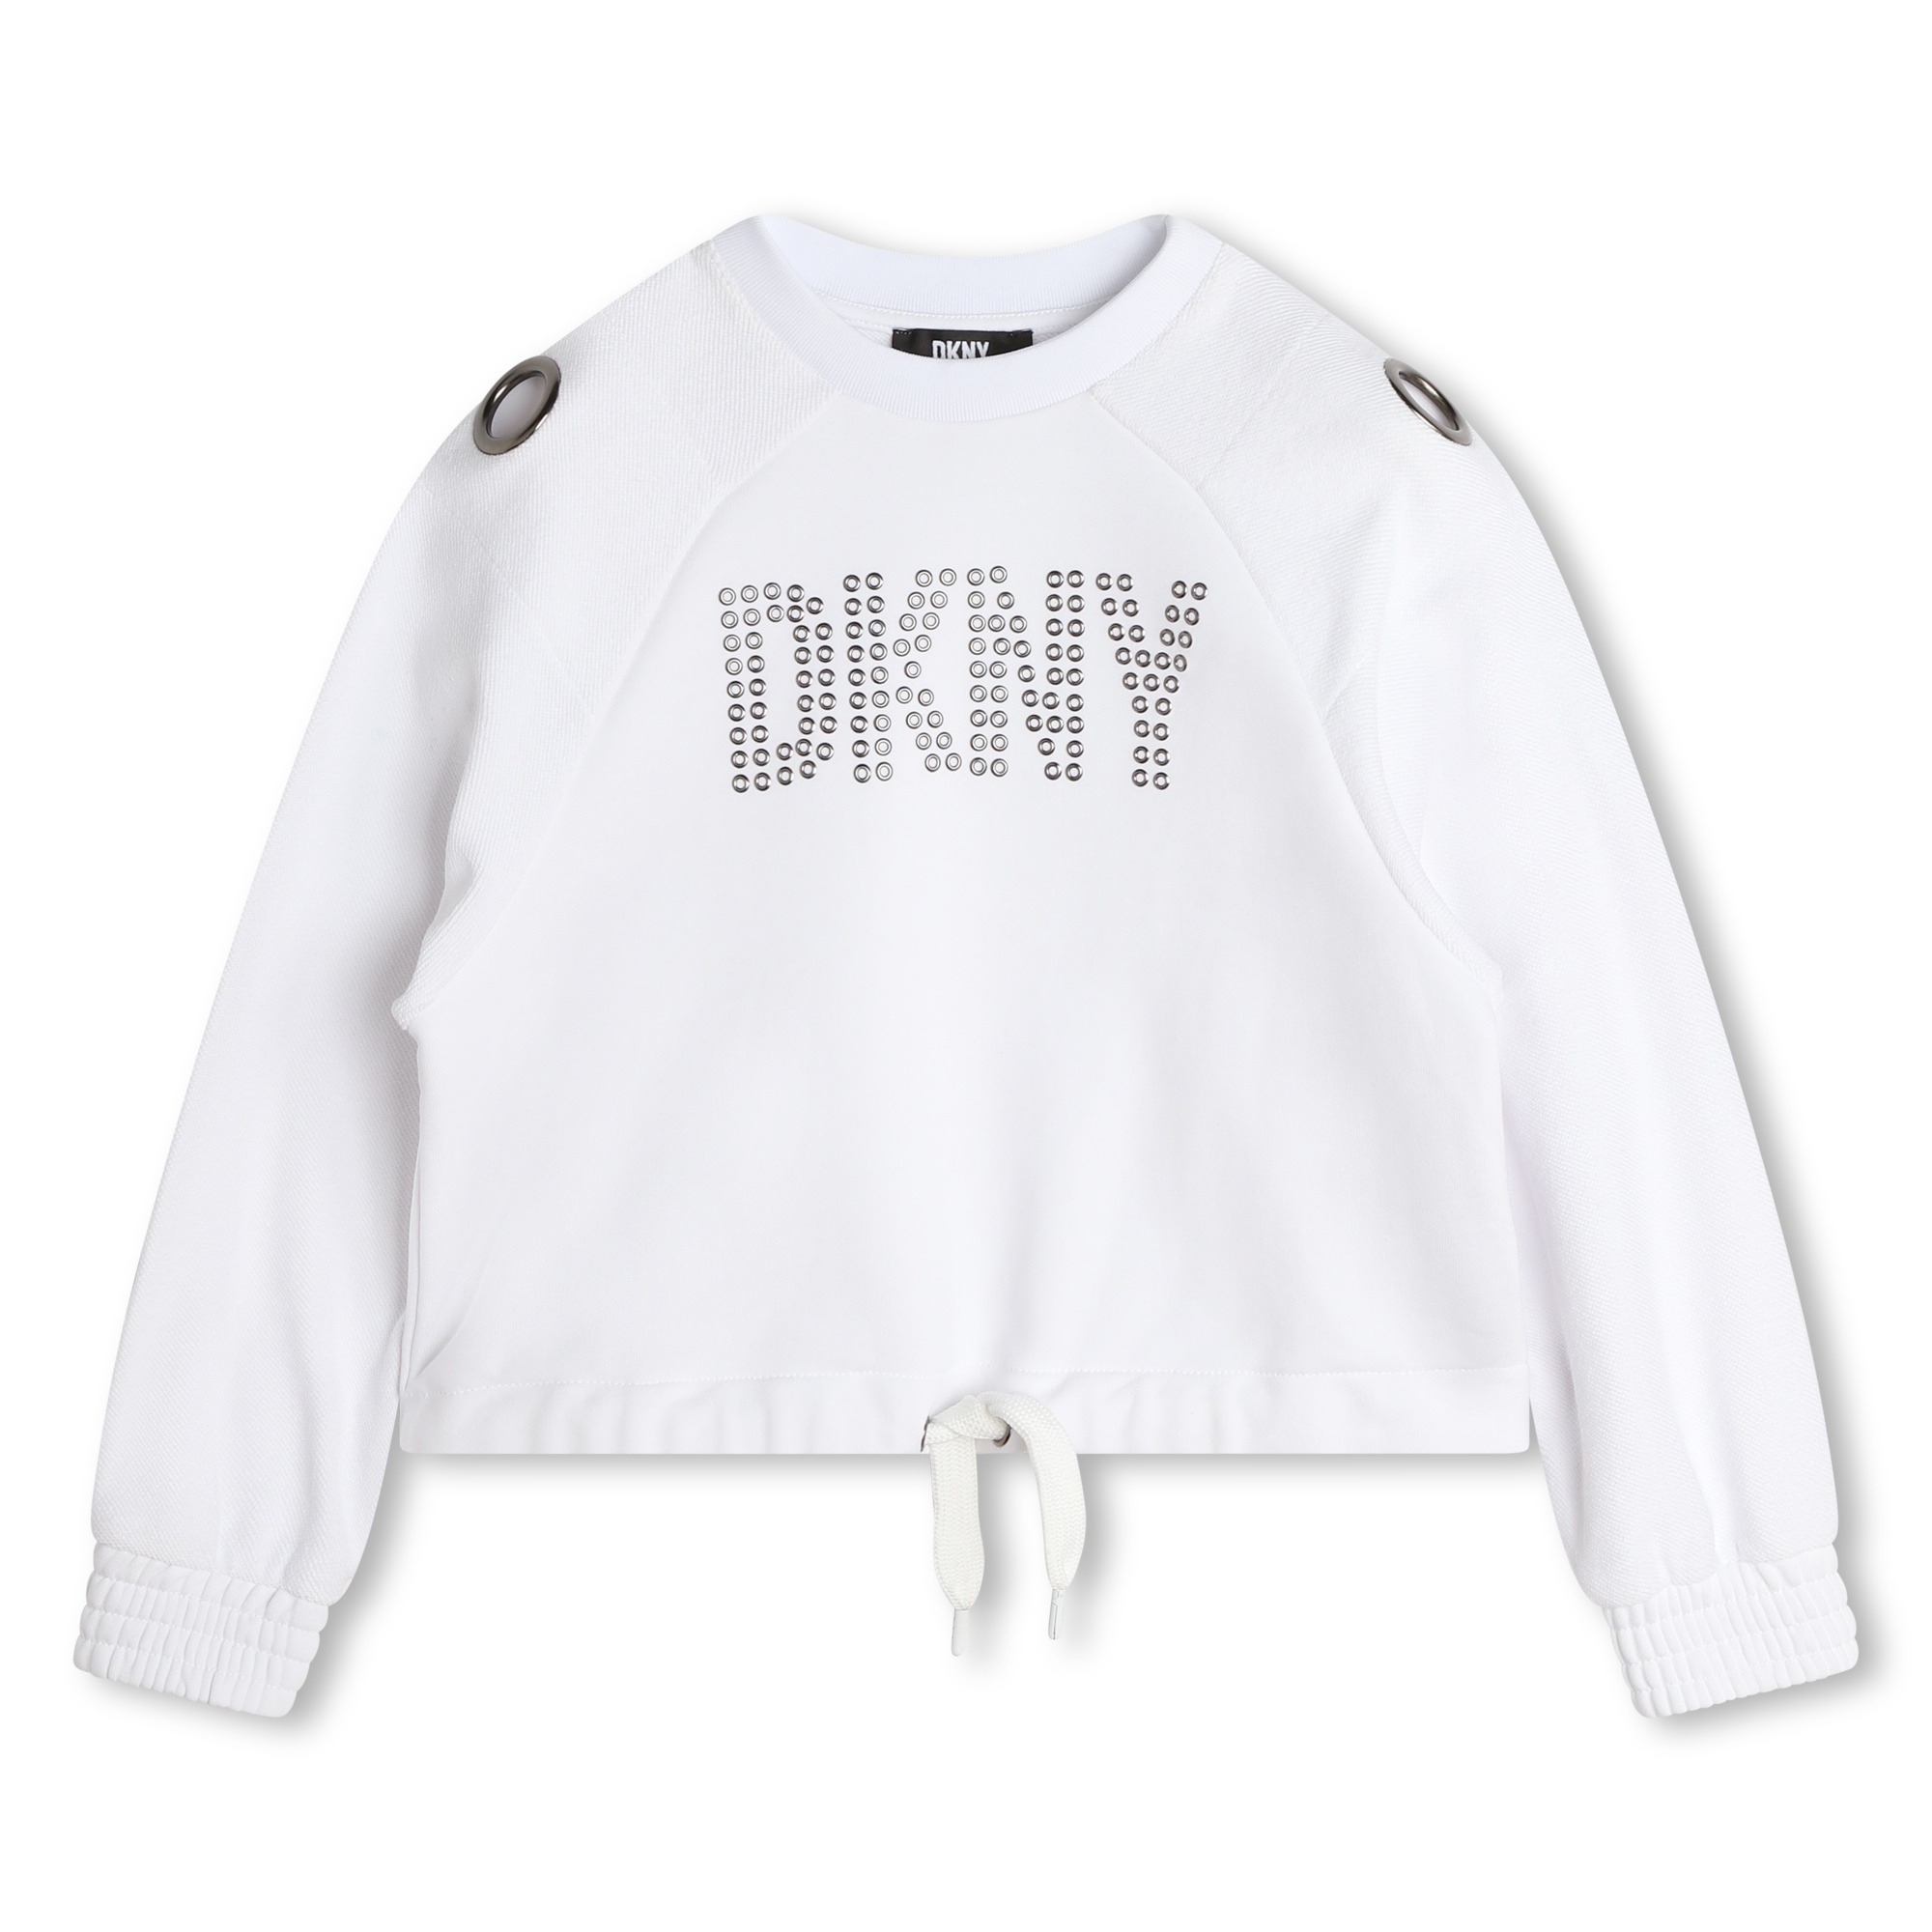 DKNY Sport Women's Crew Neck Sweatshirt Pullover White Black Logo